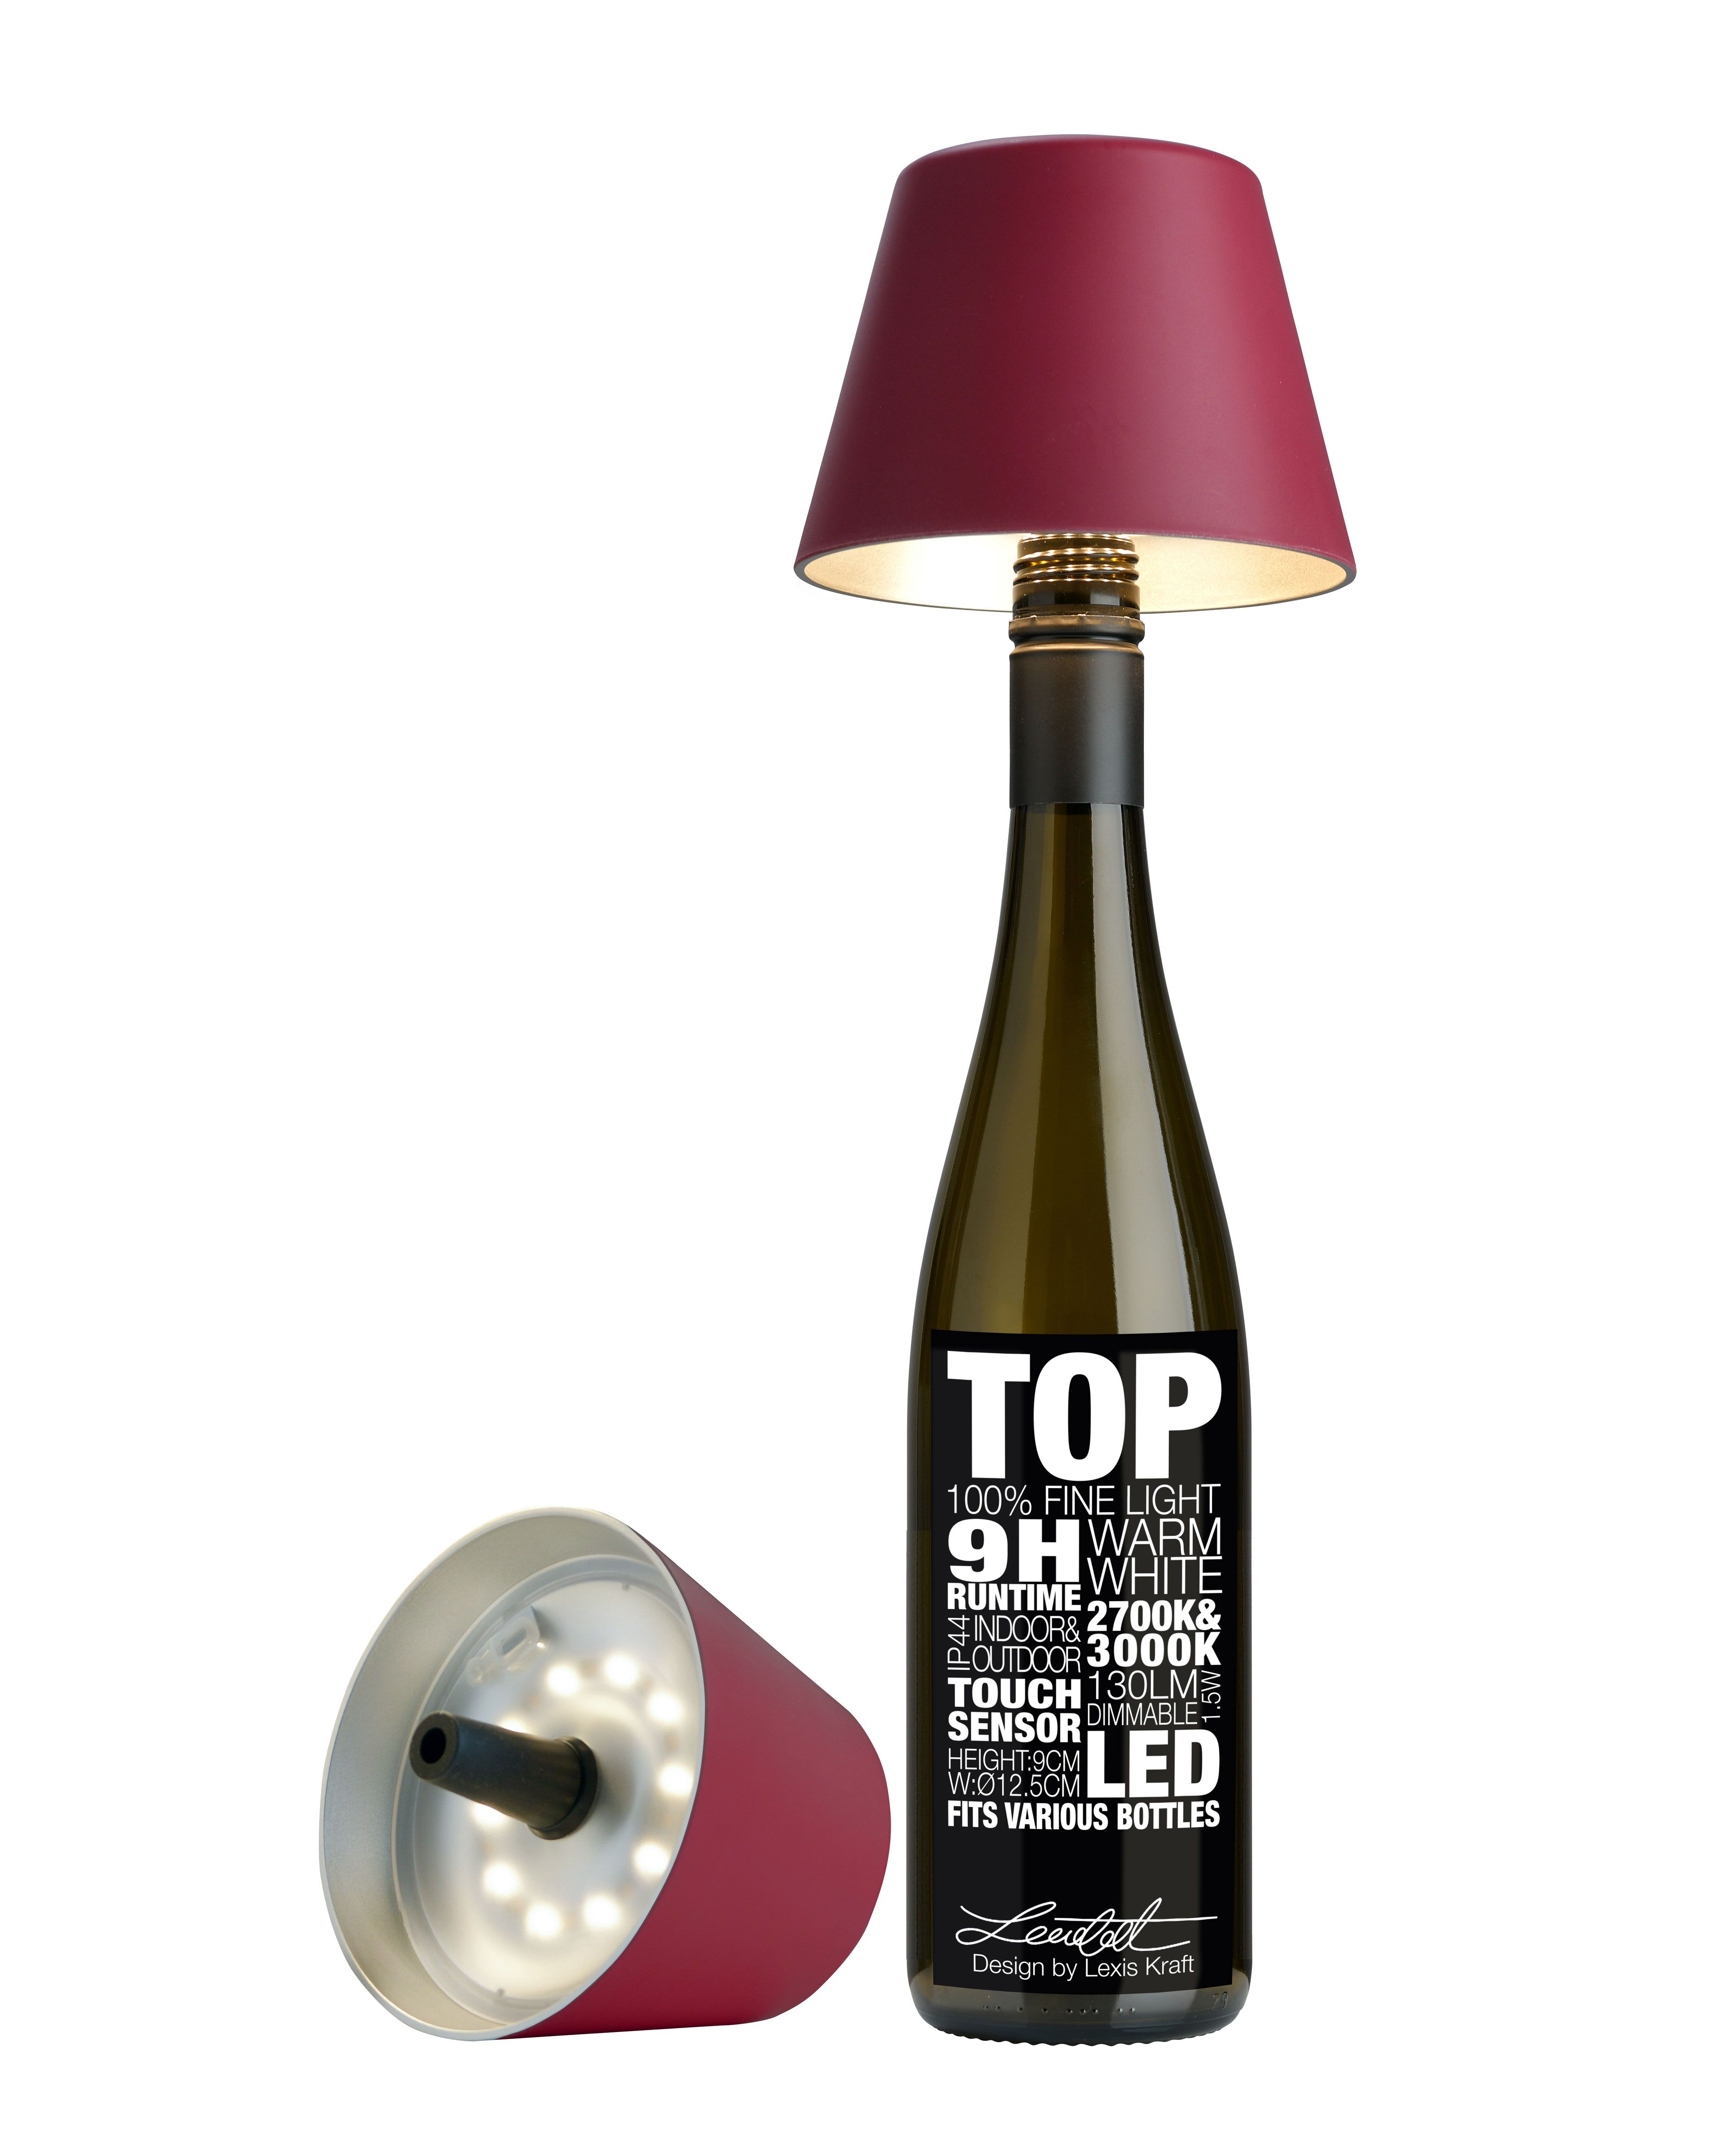 Sompex TOP LED buiten tafellamp | oplaadbaar (accu) | Kunststof | Dimbaar | bordeaux rood | waterdicht IP44